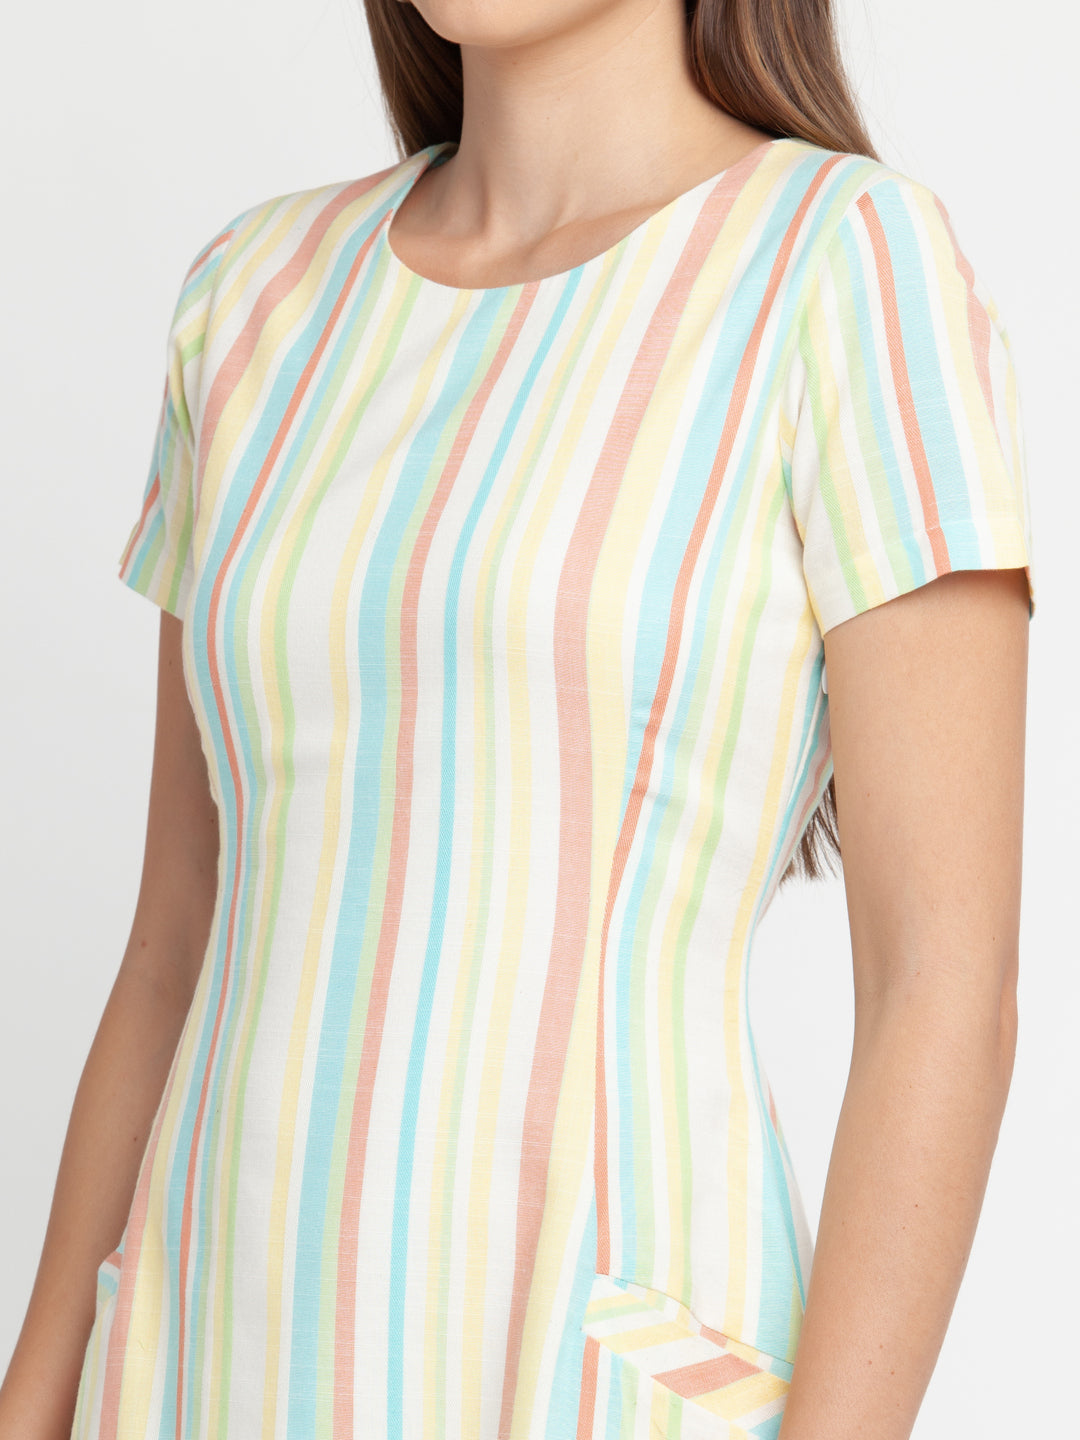 Multicolored Striped Short Dress For Women